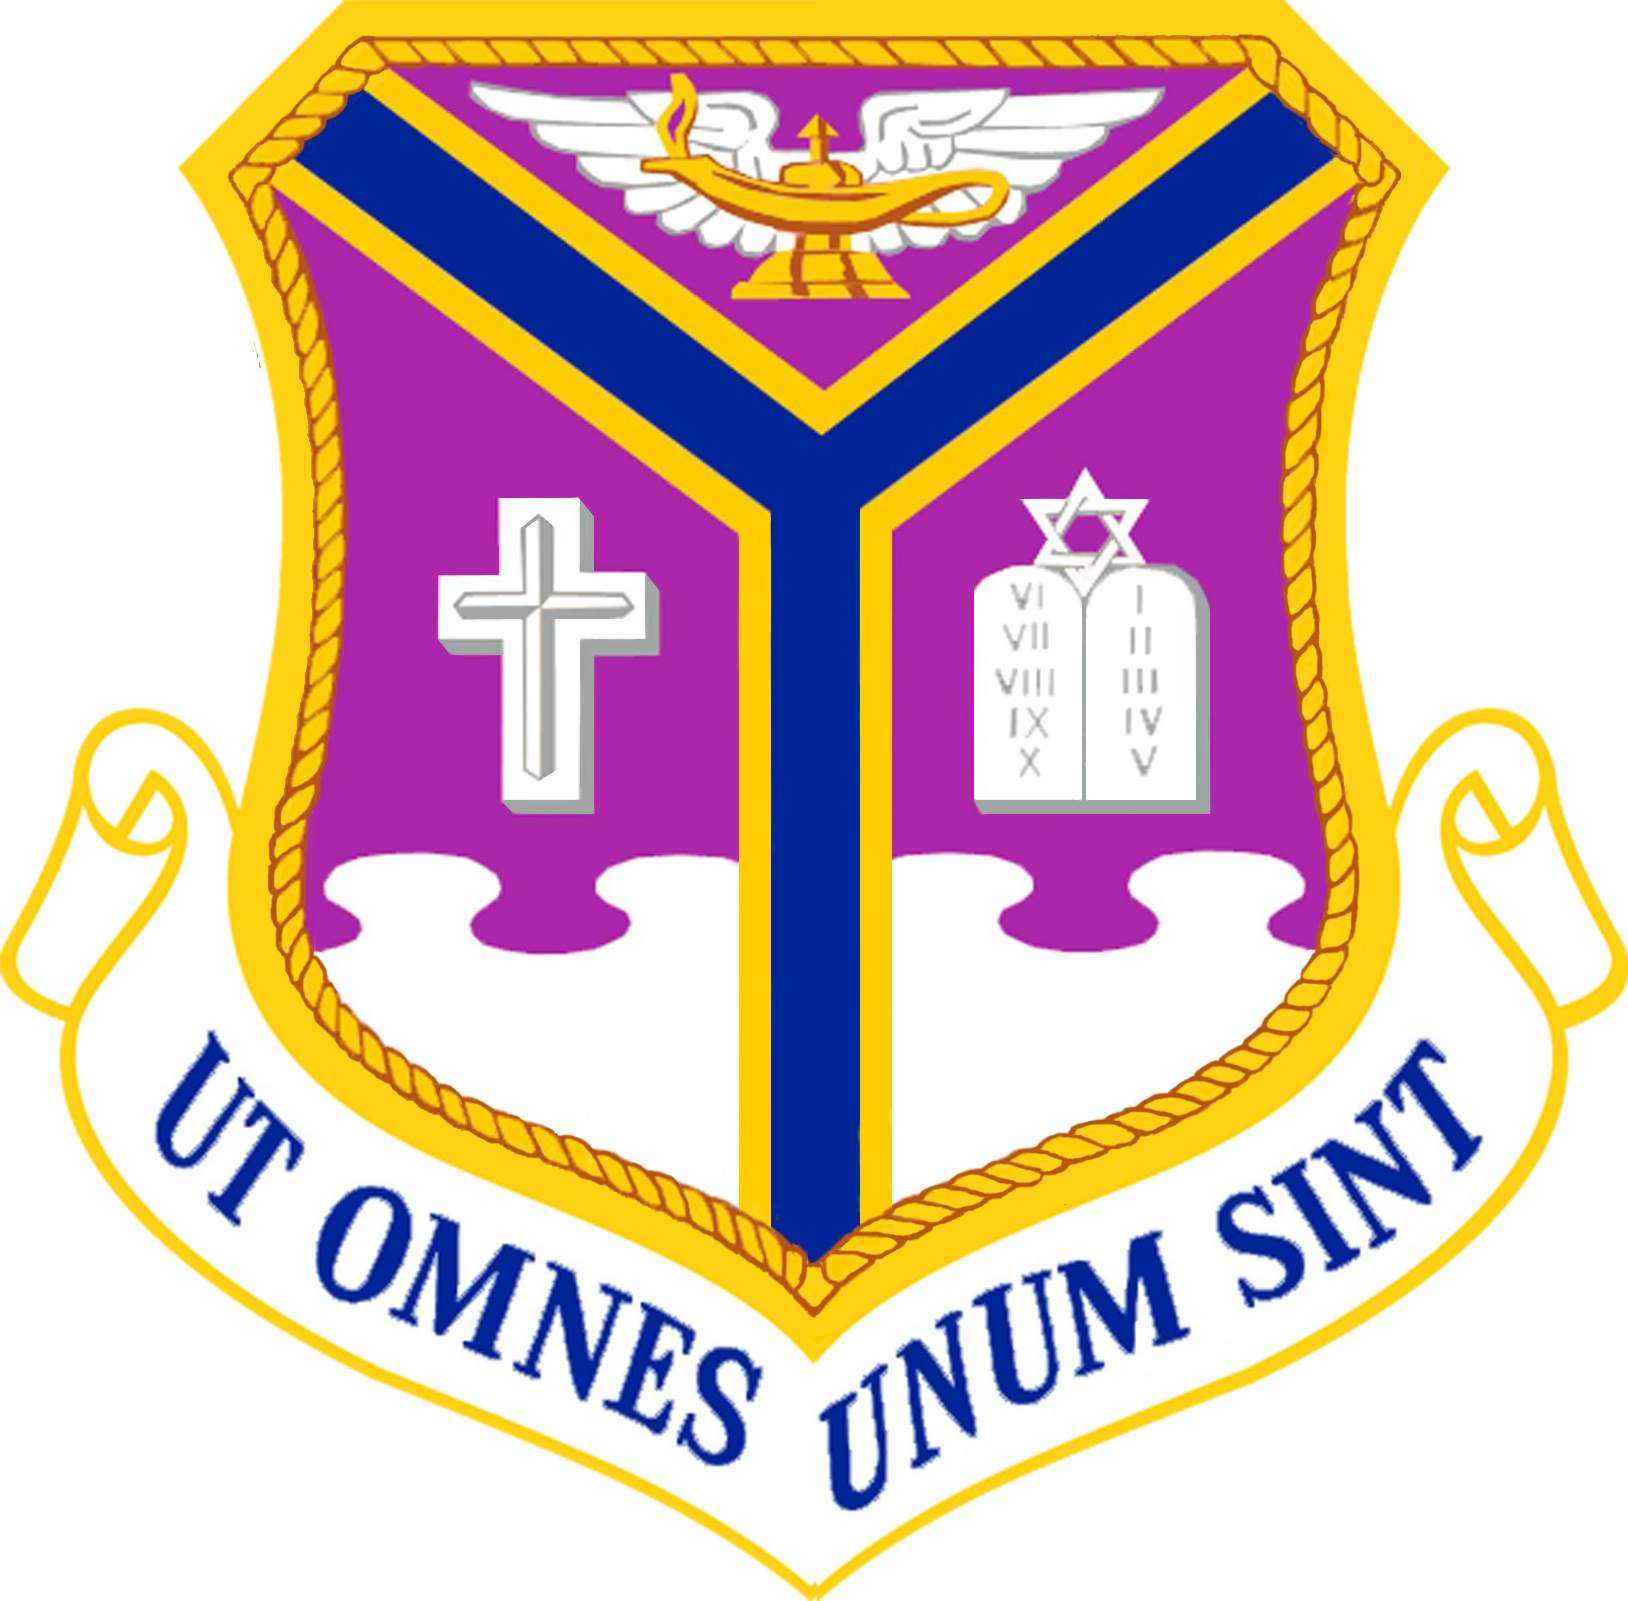 USAF - Chaplain School Second Emblem 2.png